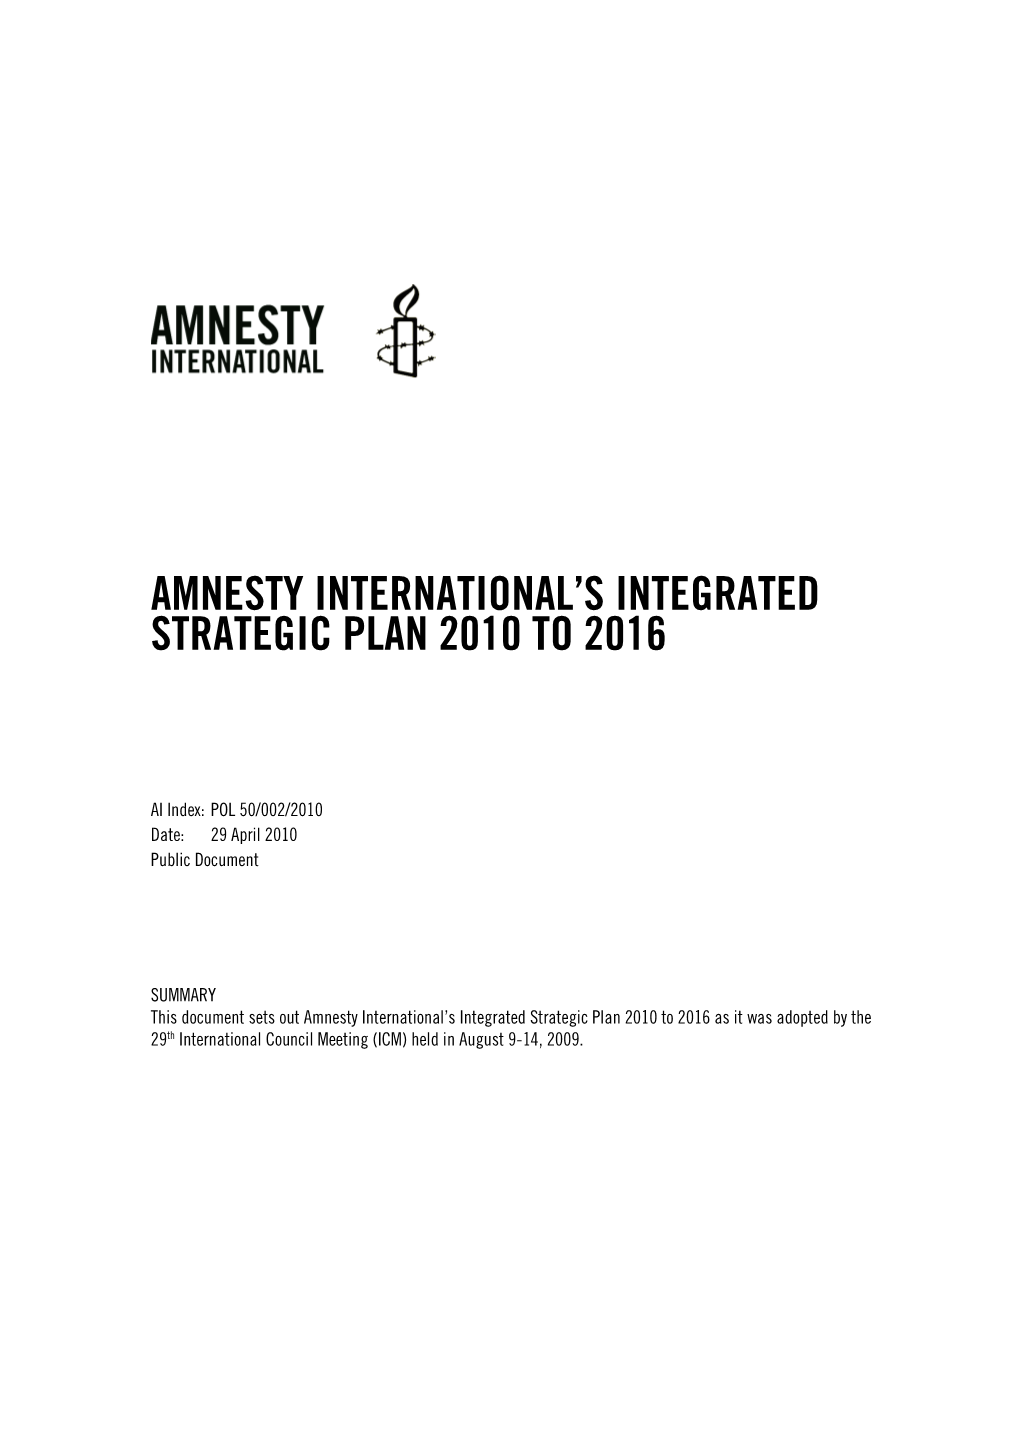 Amnesty International's Integrated Strategic Plan 2010 to 2016